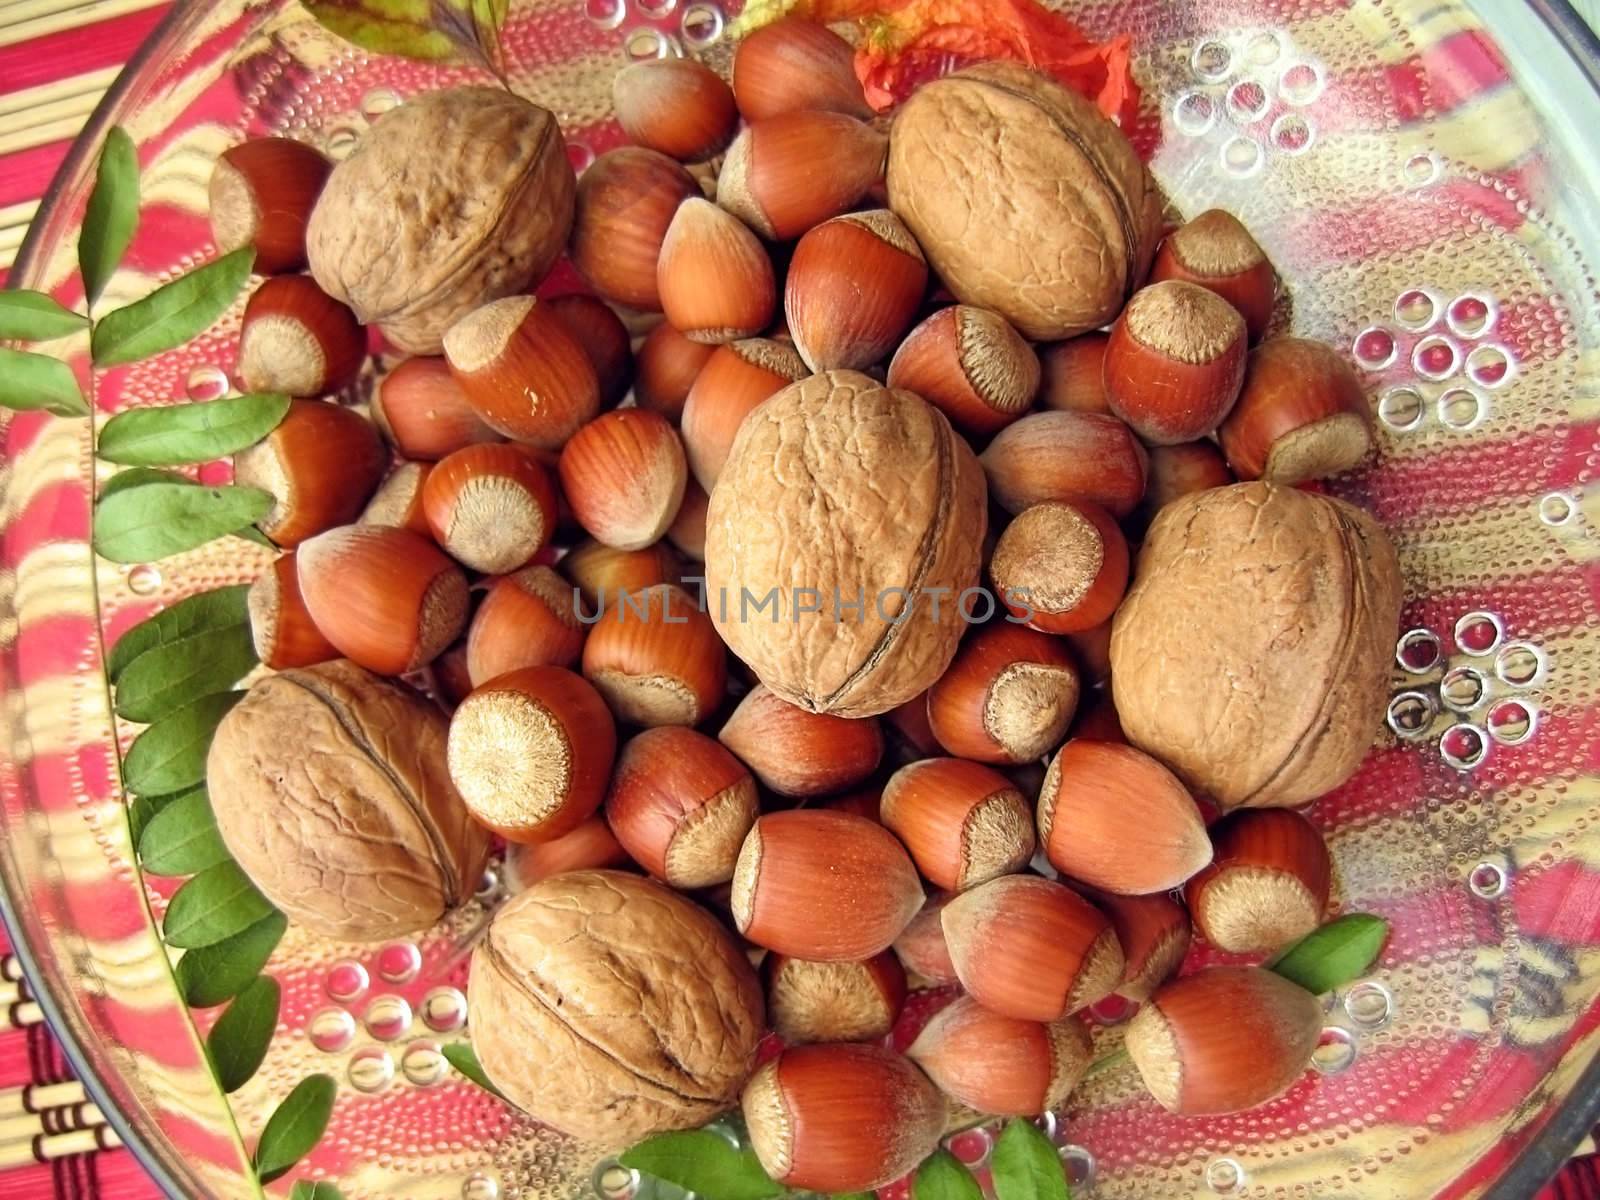 Hazelnuts and walnuts by Angel_a